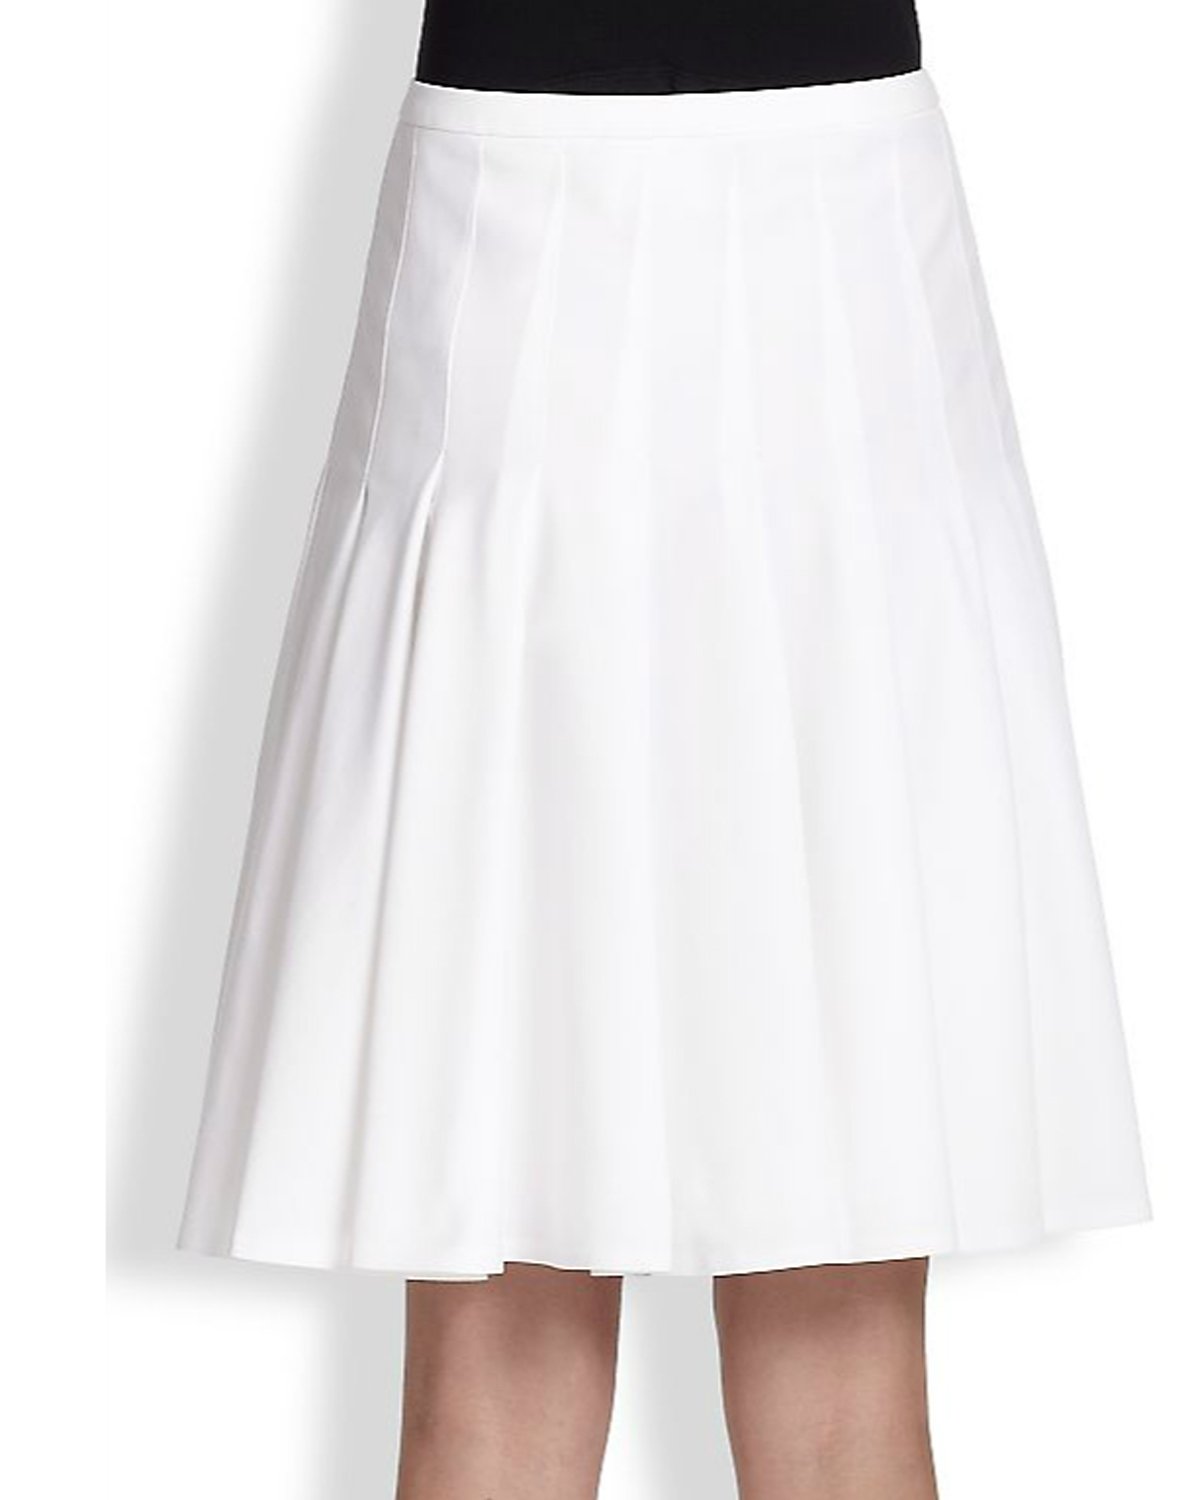 White Cotton Pleated self Yoke skirt – Elizabeth's Custom Skirts